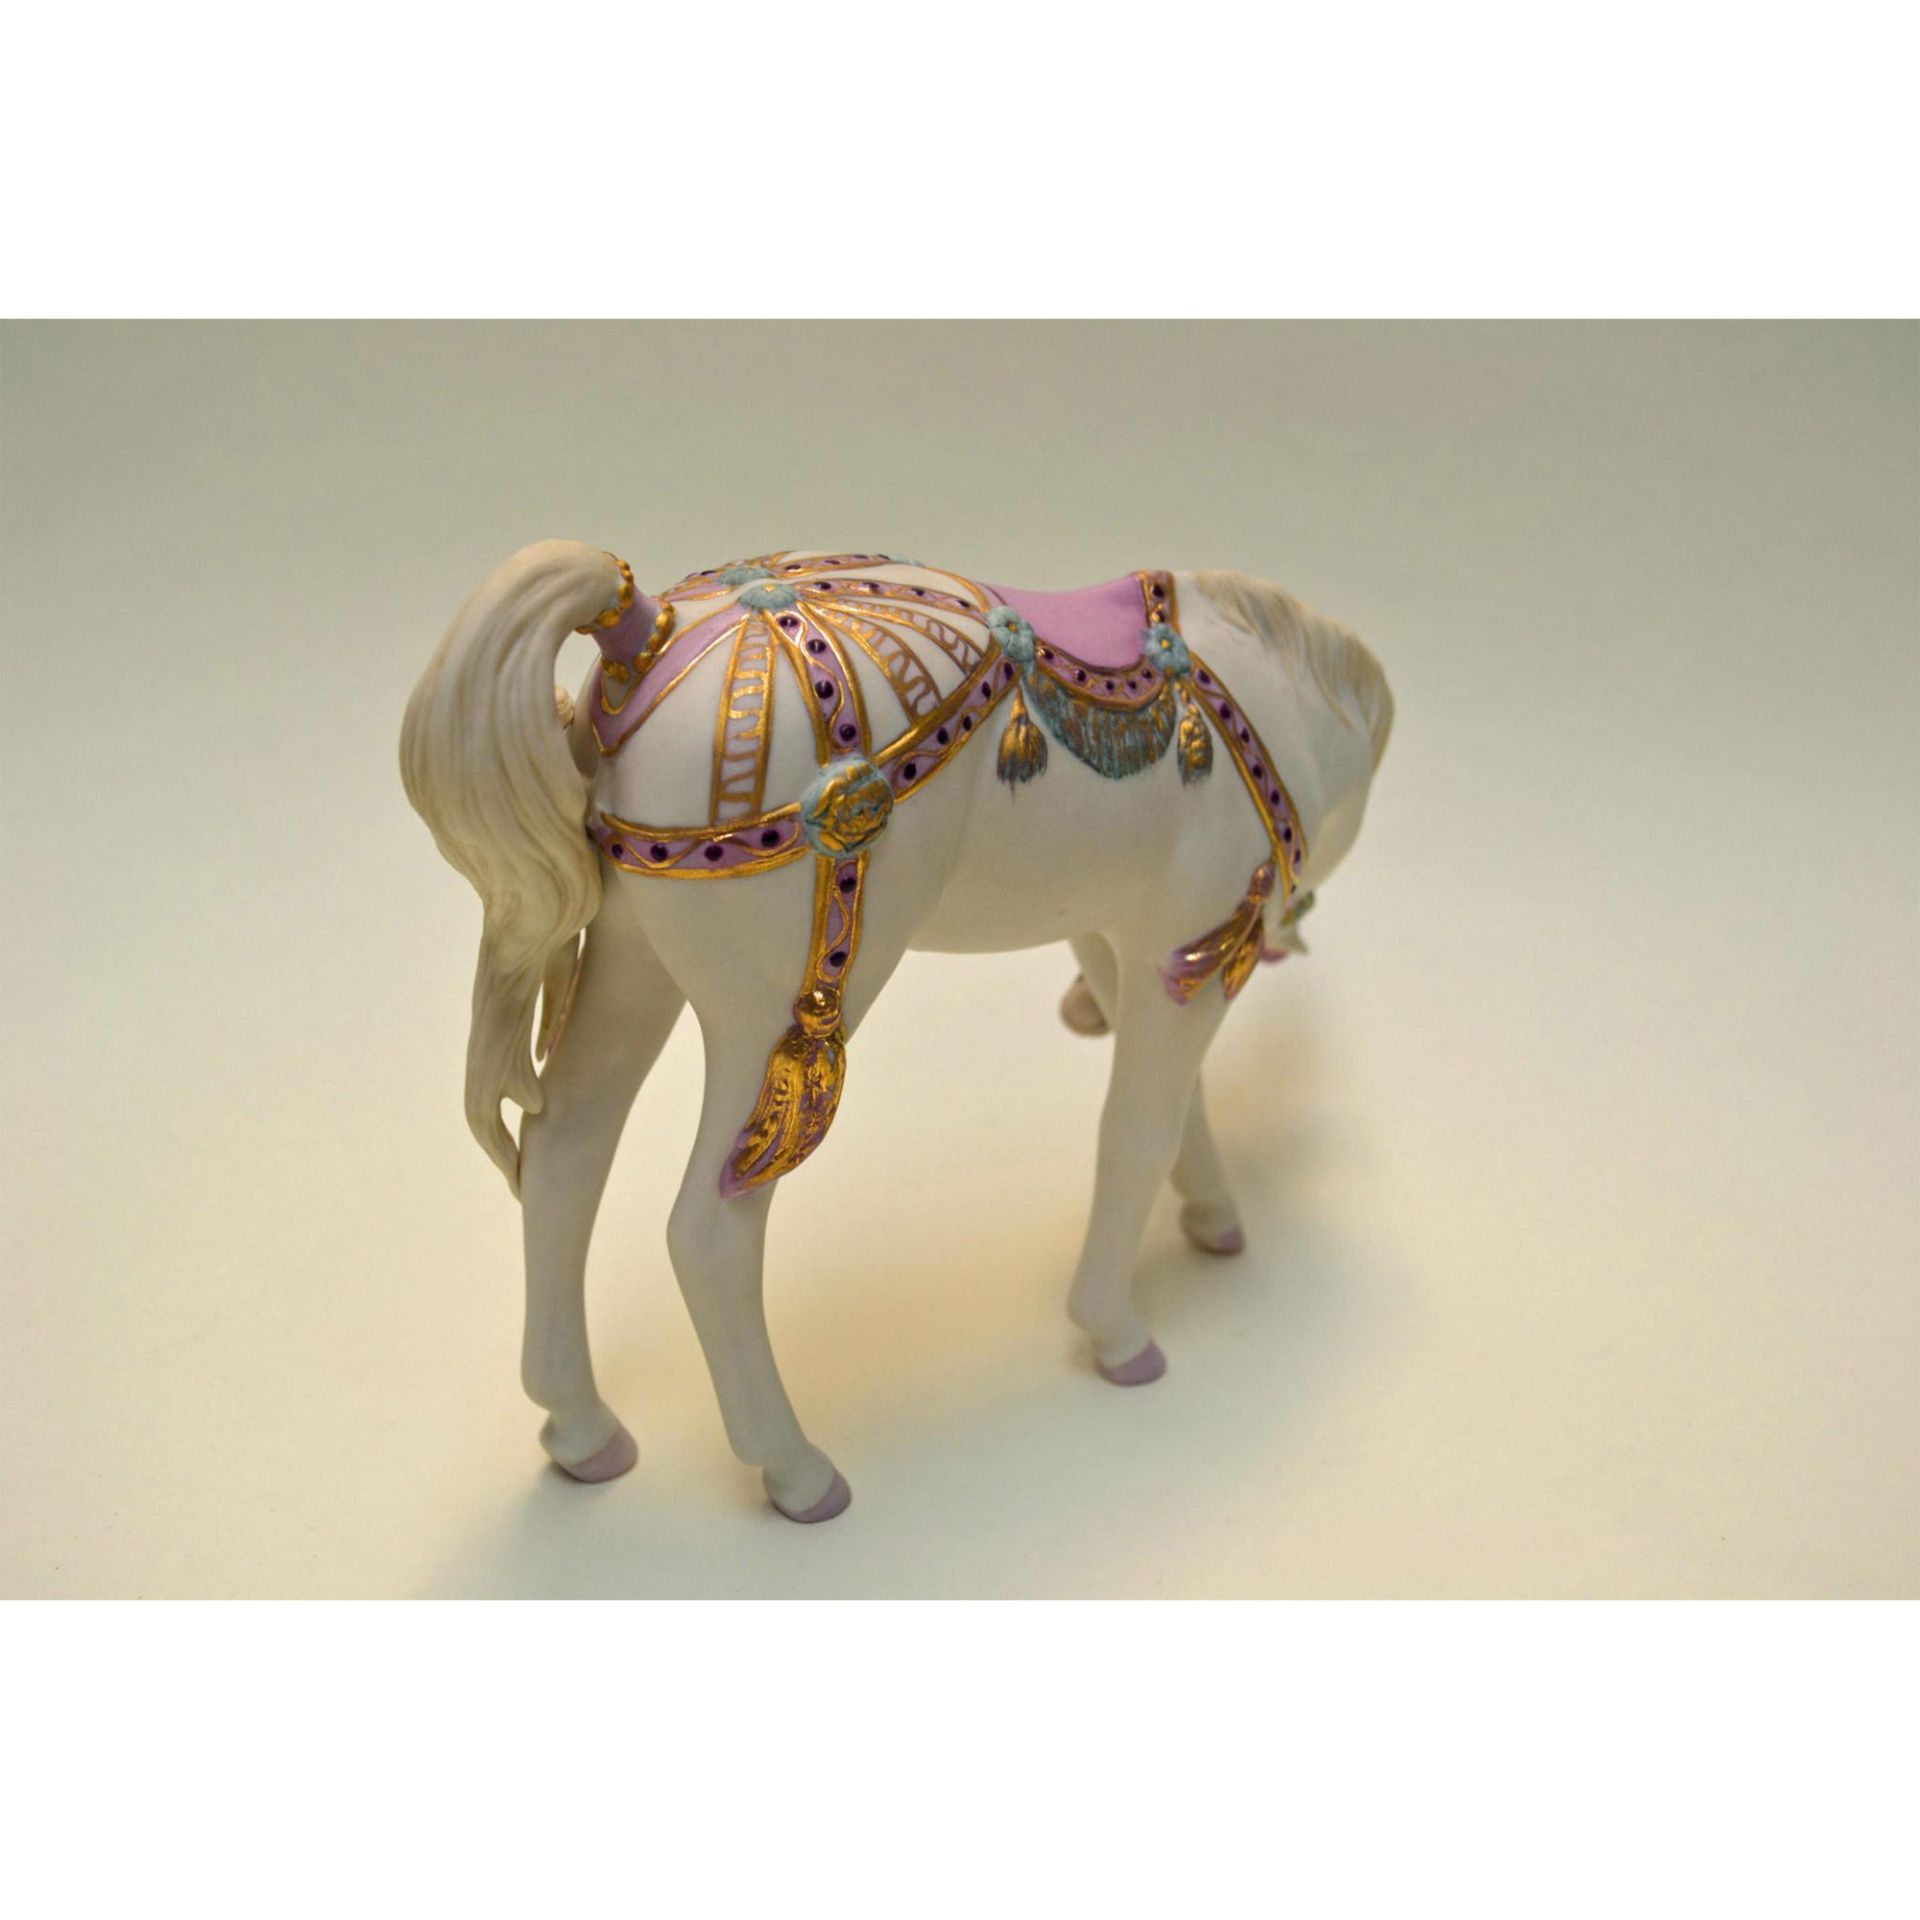 Cybis Porcelain Poppy The Performing Pony Figurine - Image 5 of 7